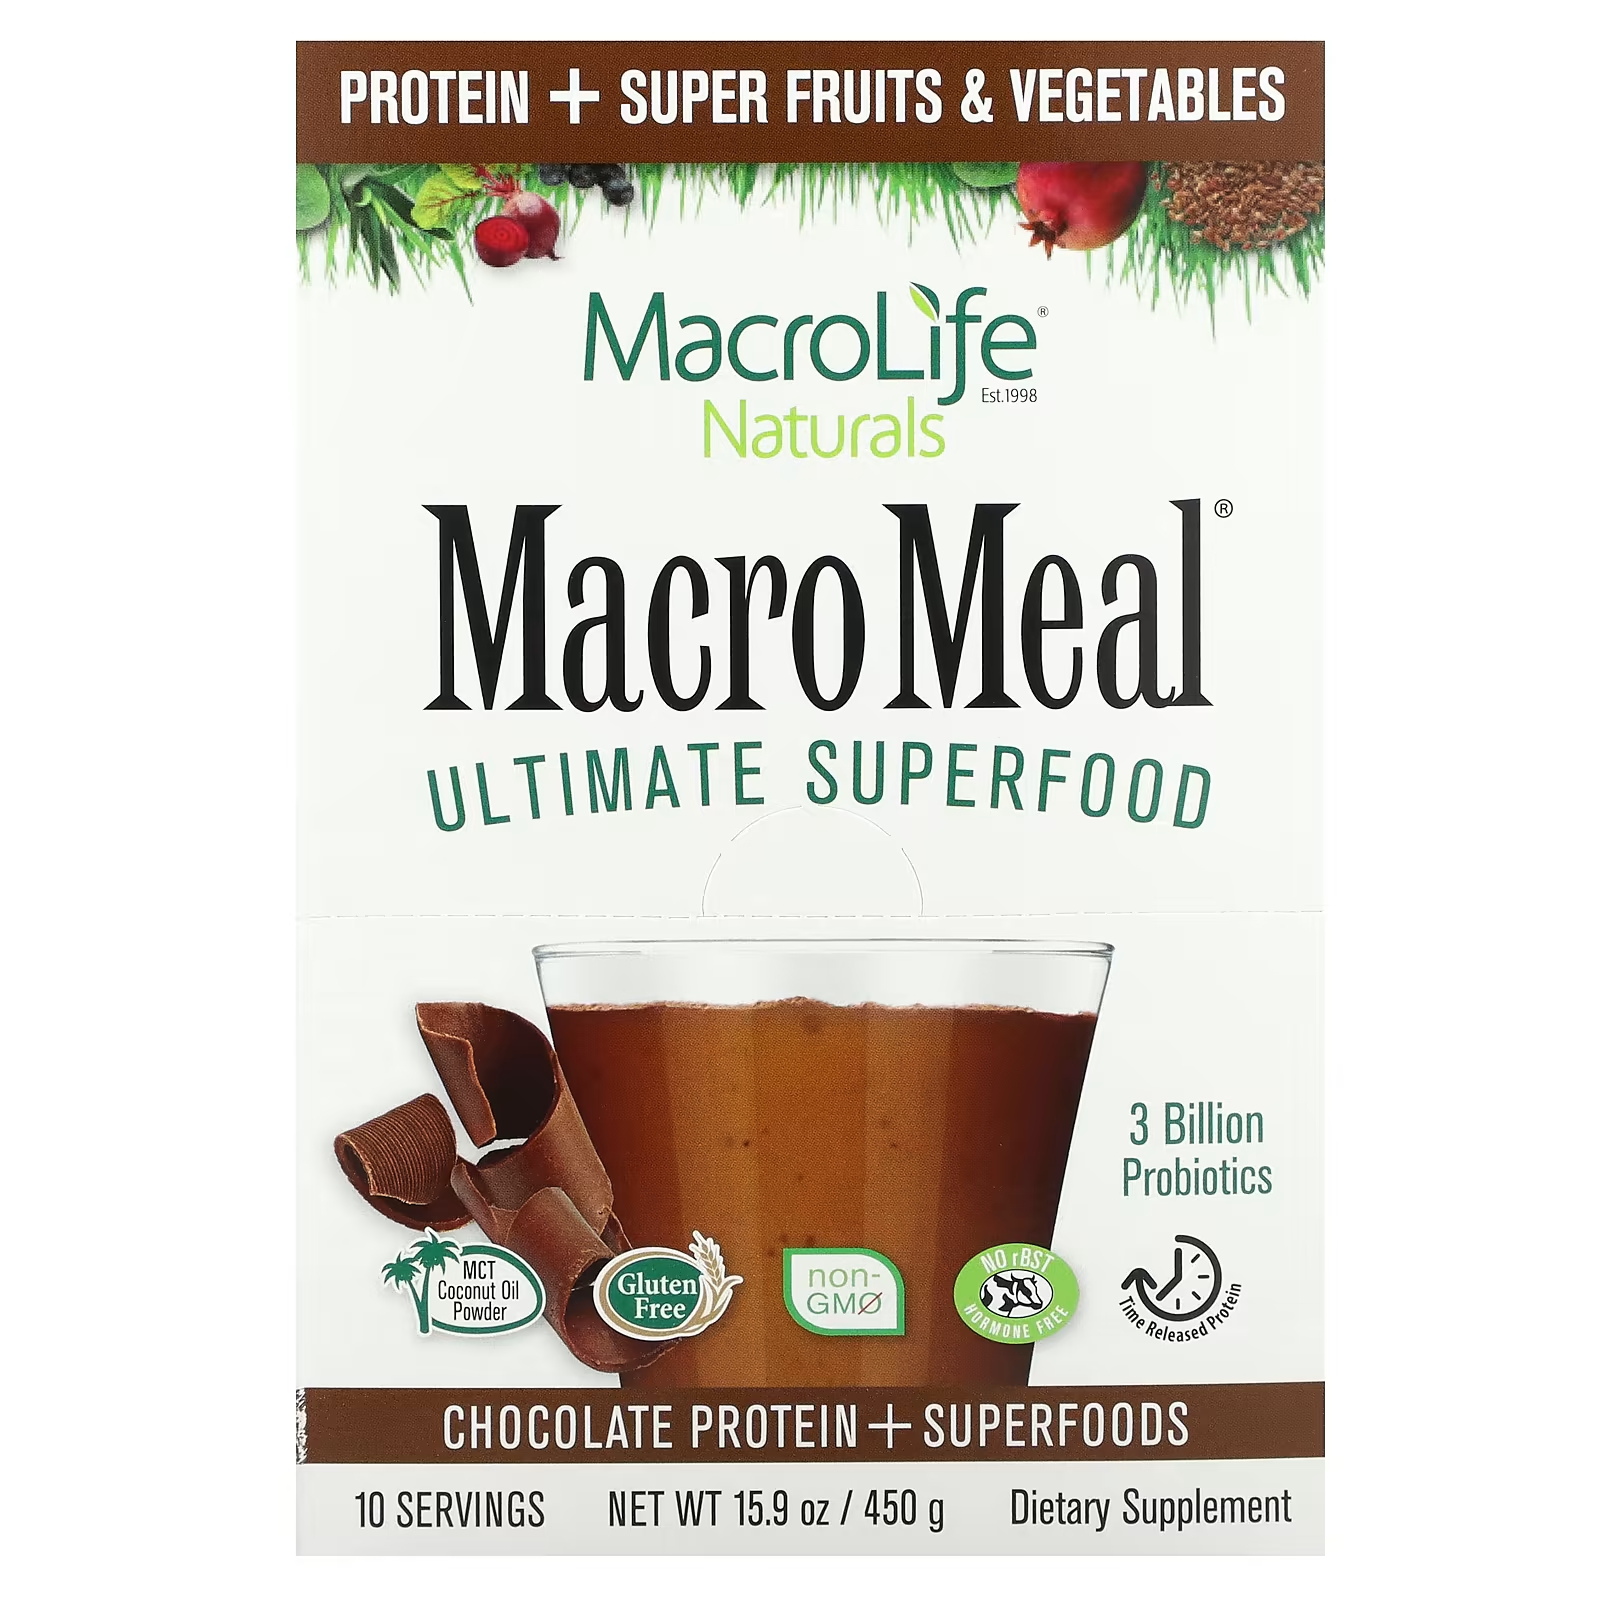 Macrolife Naturals MacroMeal Ultimate Superfood Chocolate 10 пакетов по 1,6 унции (45 г) каждый macrolife naturals macropets ежедневный суперфуд для собак и кошек 180 г 6 35 унции